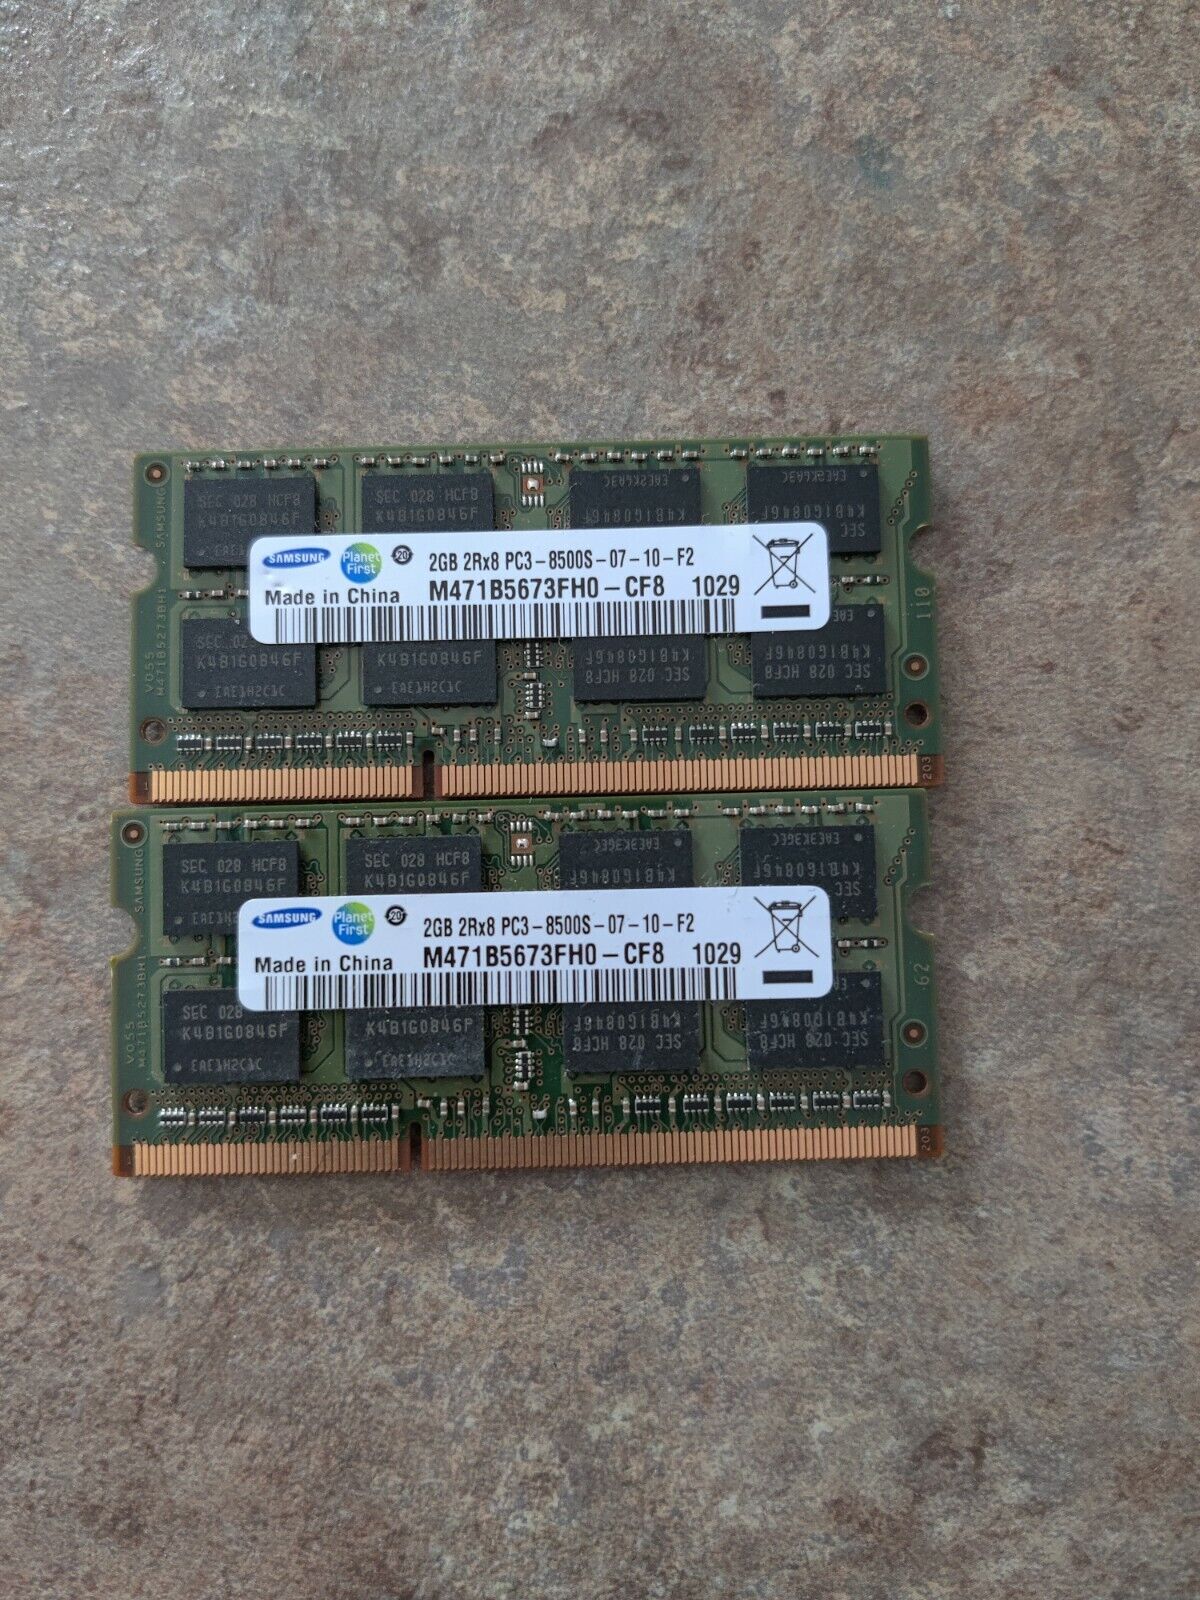 Samsung 4gb - 2 x 2GB 2Rx8 PC3-8500S-7-10-F2 Laptop RAM Memory for Apple Laptops